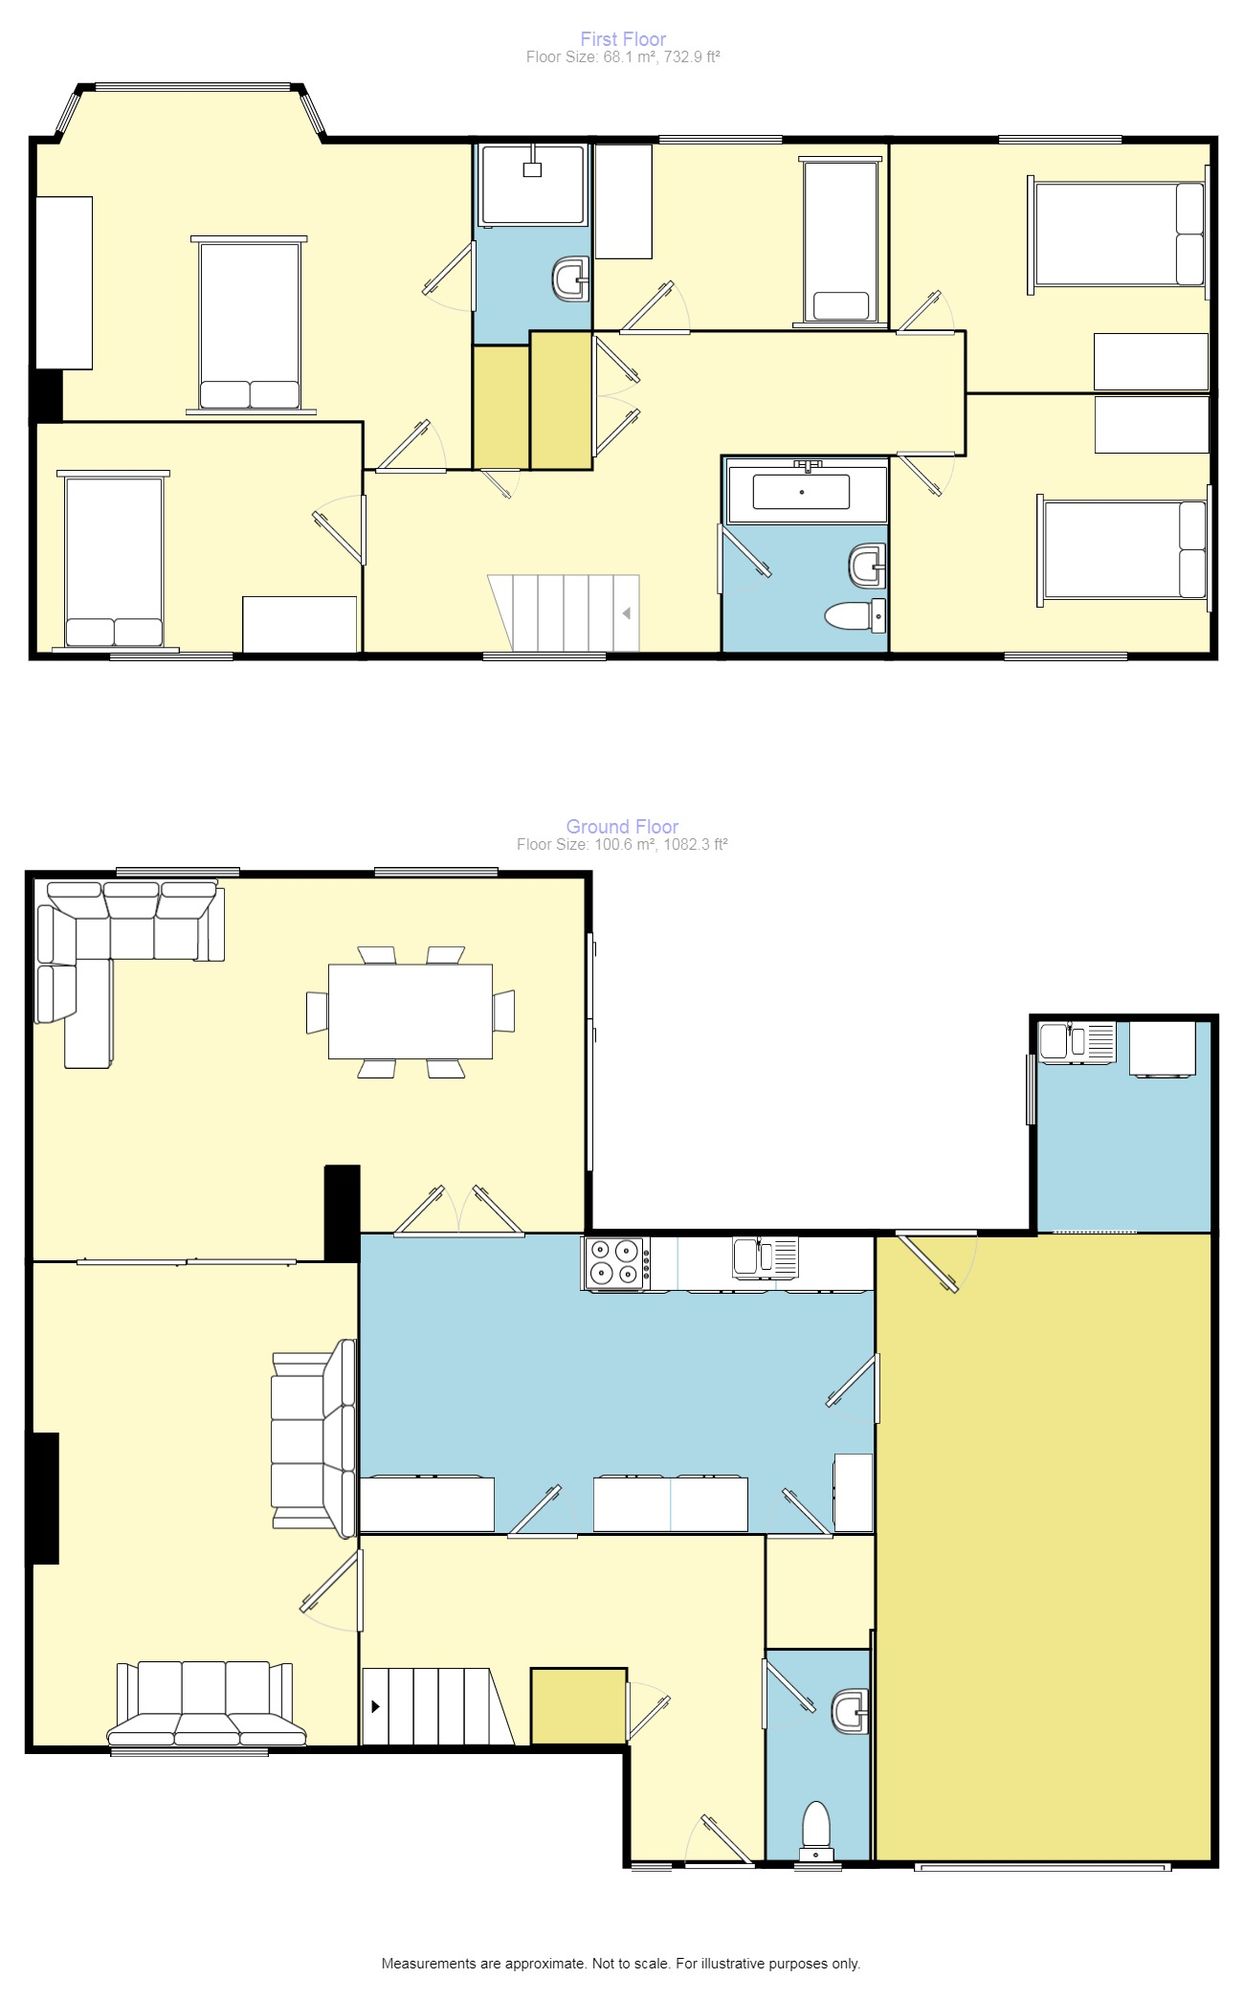 5 Bedrooms Semi-detached house for sale in Ellingham Road, Hemel Hempstead HP2